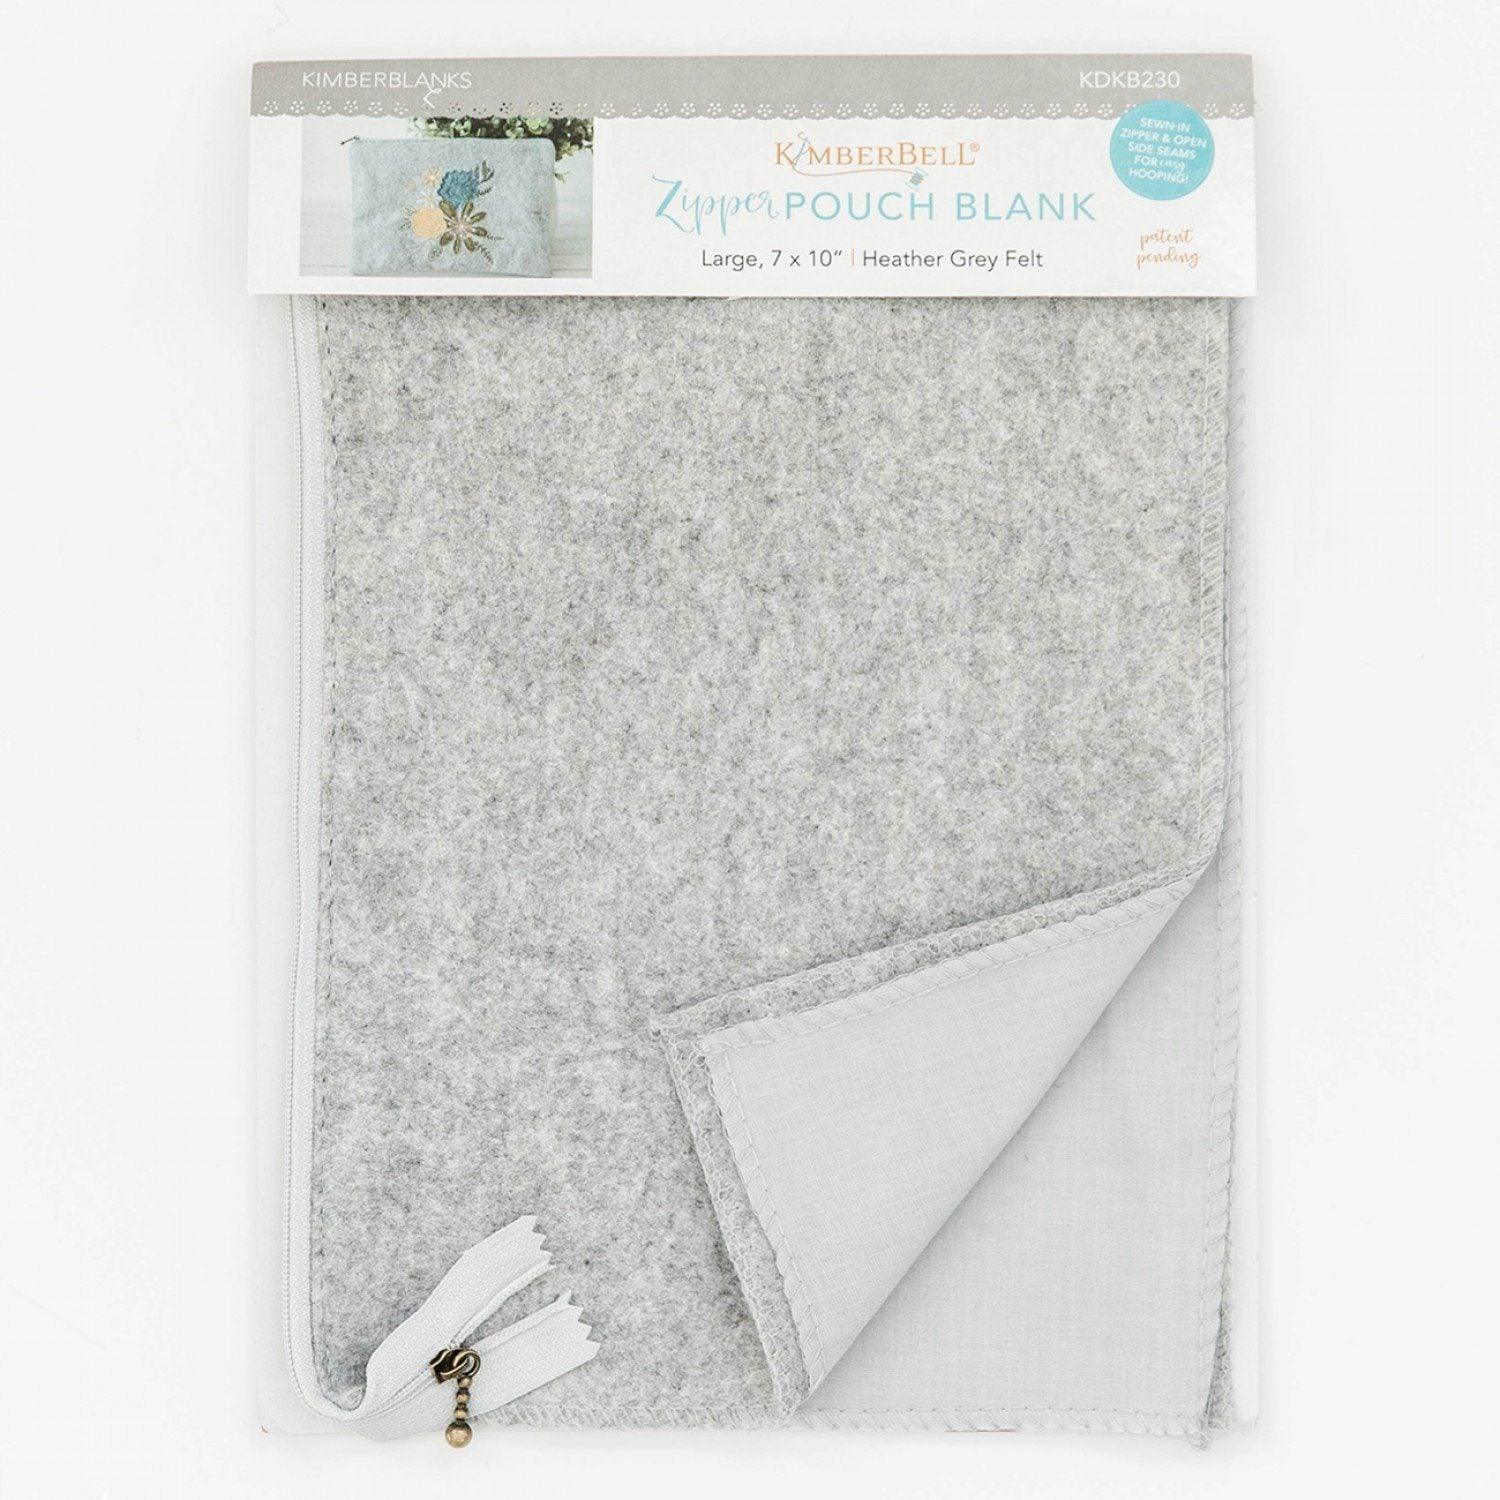 Zipper Pouch Blank - Heather Grey - Felt - Large (7" x 10") - Kimberbell - Kawartha Quilting and Sewing LTD.